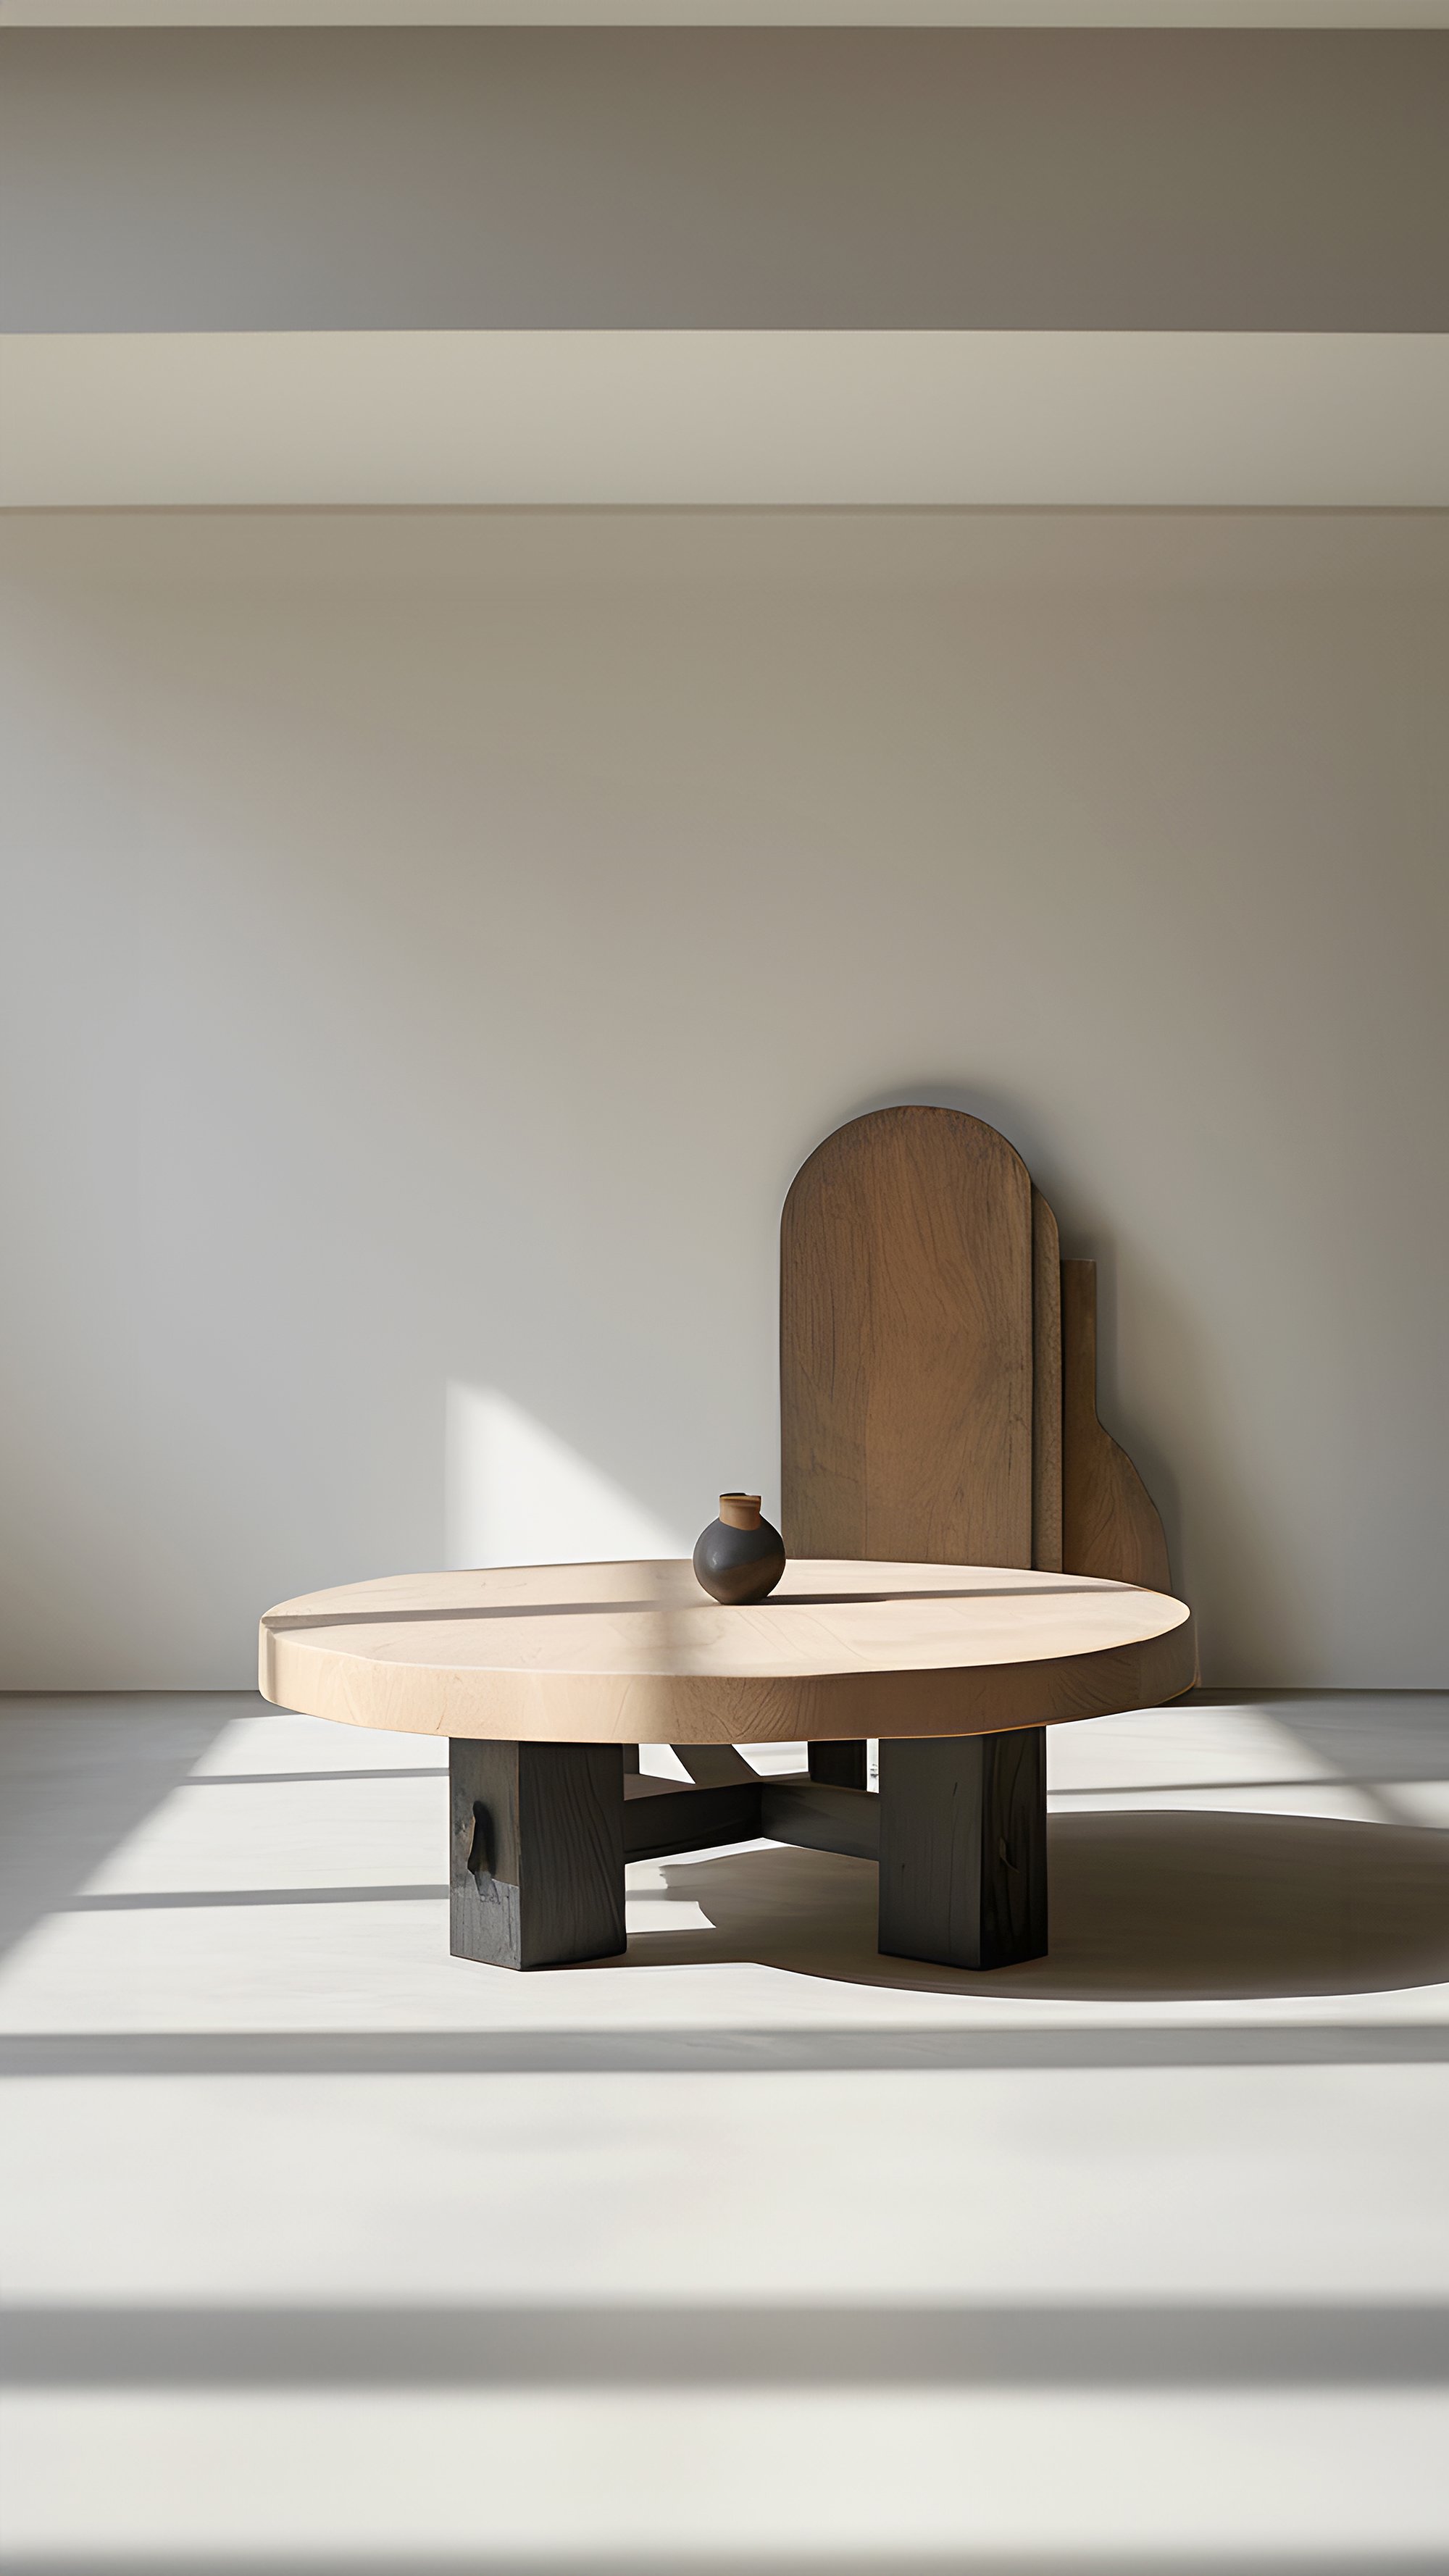 Cuatri-Leg Round Coffee Table - Harmonic Fundamenta 37 by NONO — 7.jpg